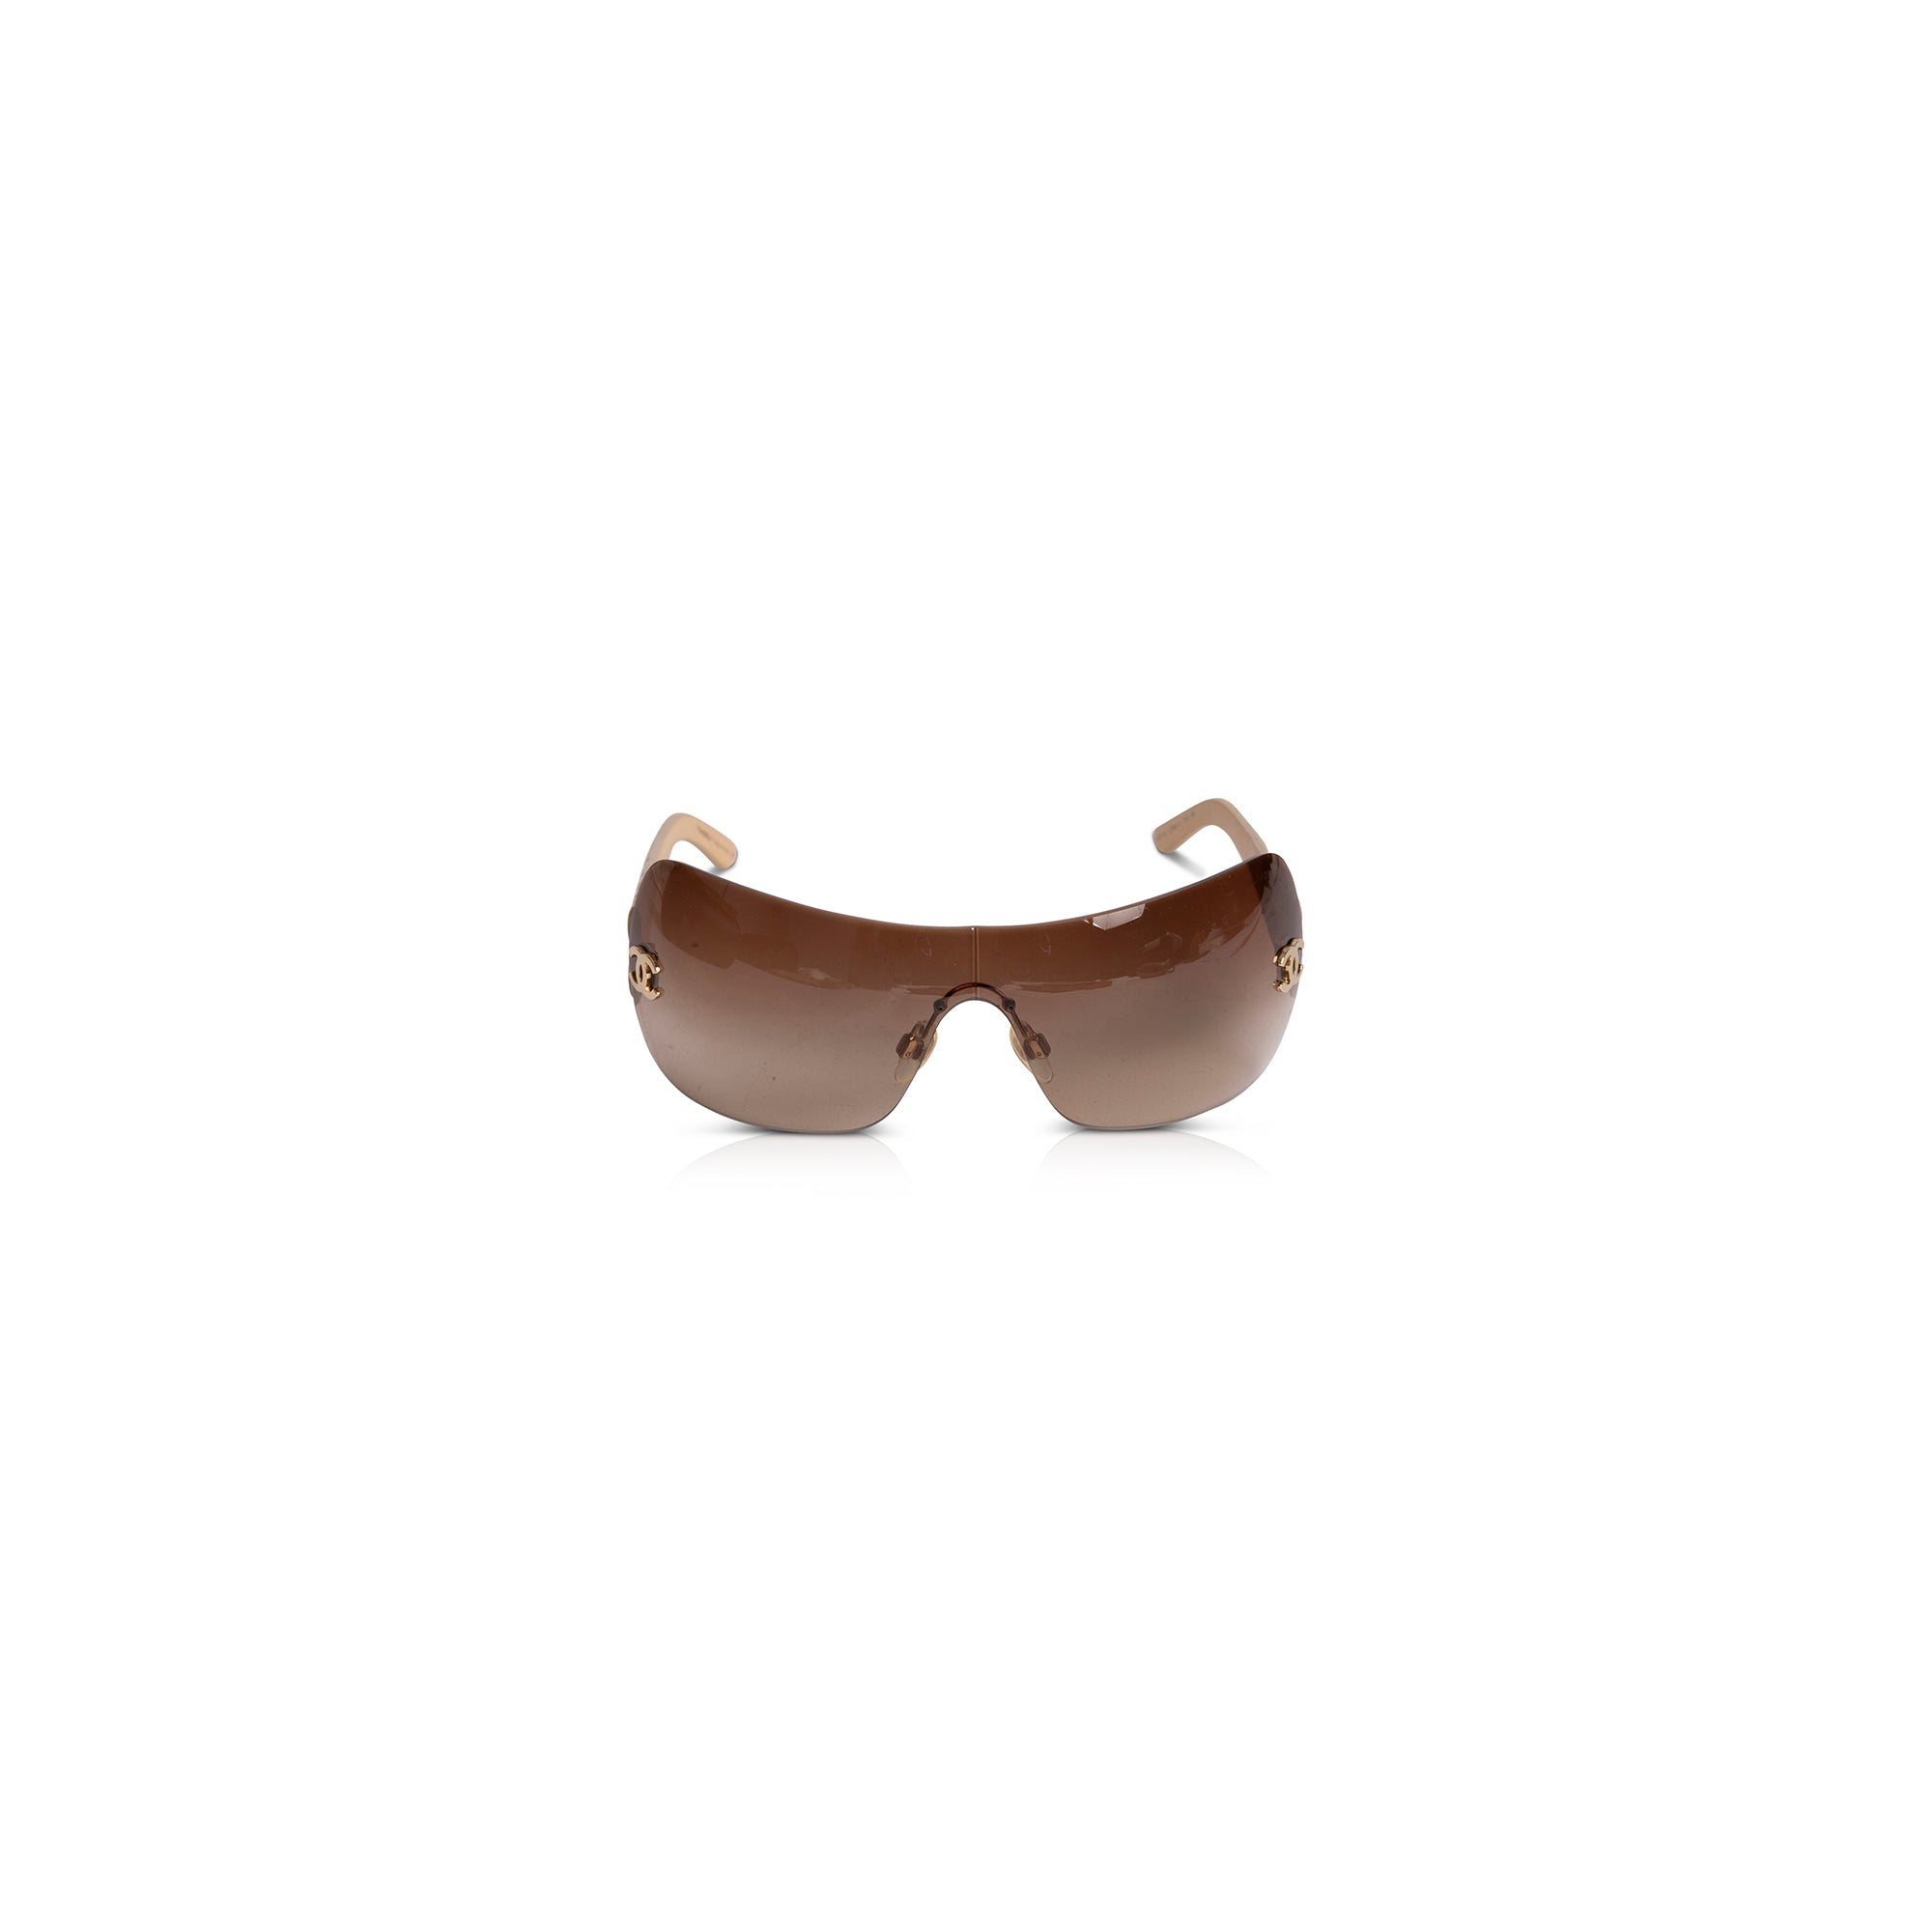 Classic Side Leather Shield Sunglasses | Shield sunglasses, Sunglasses,  Leather